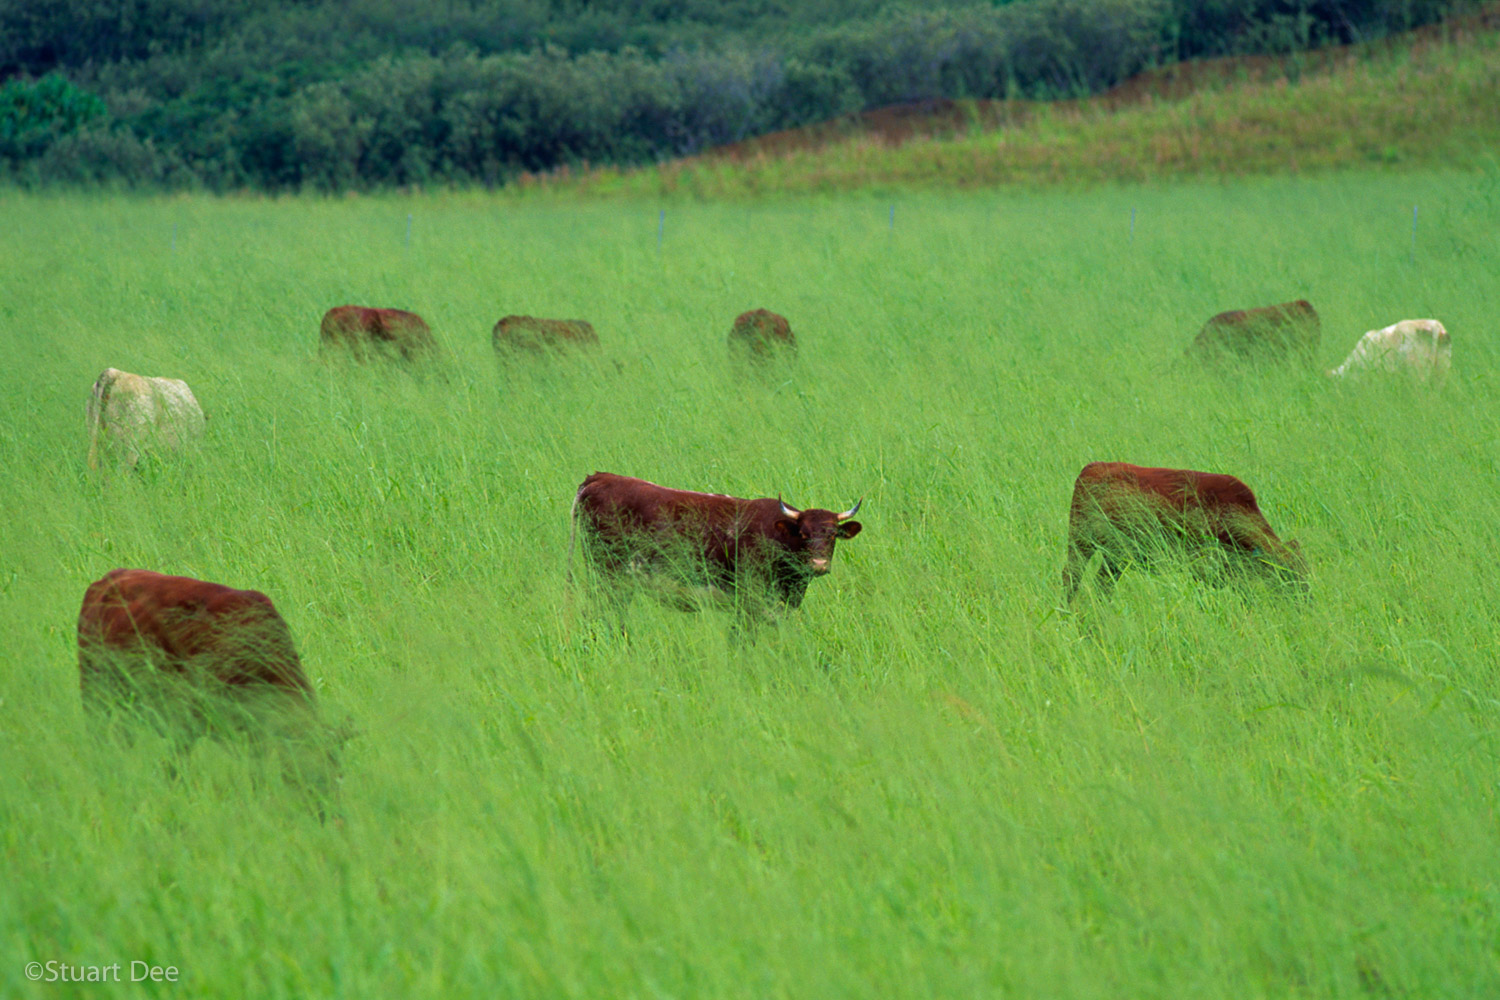  Cows grazing in field, Kauai, Hawaii, USA 